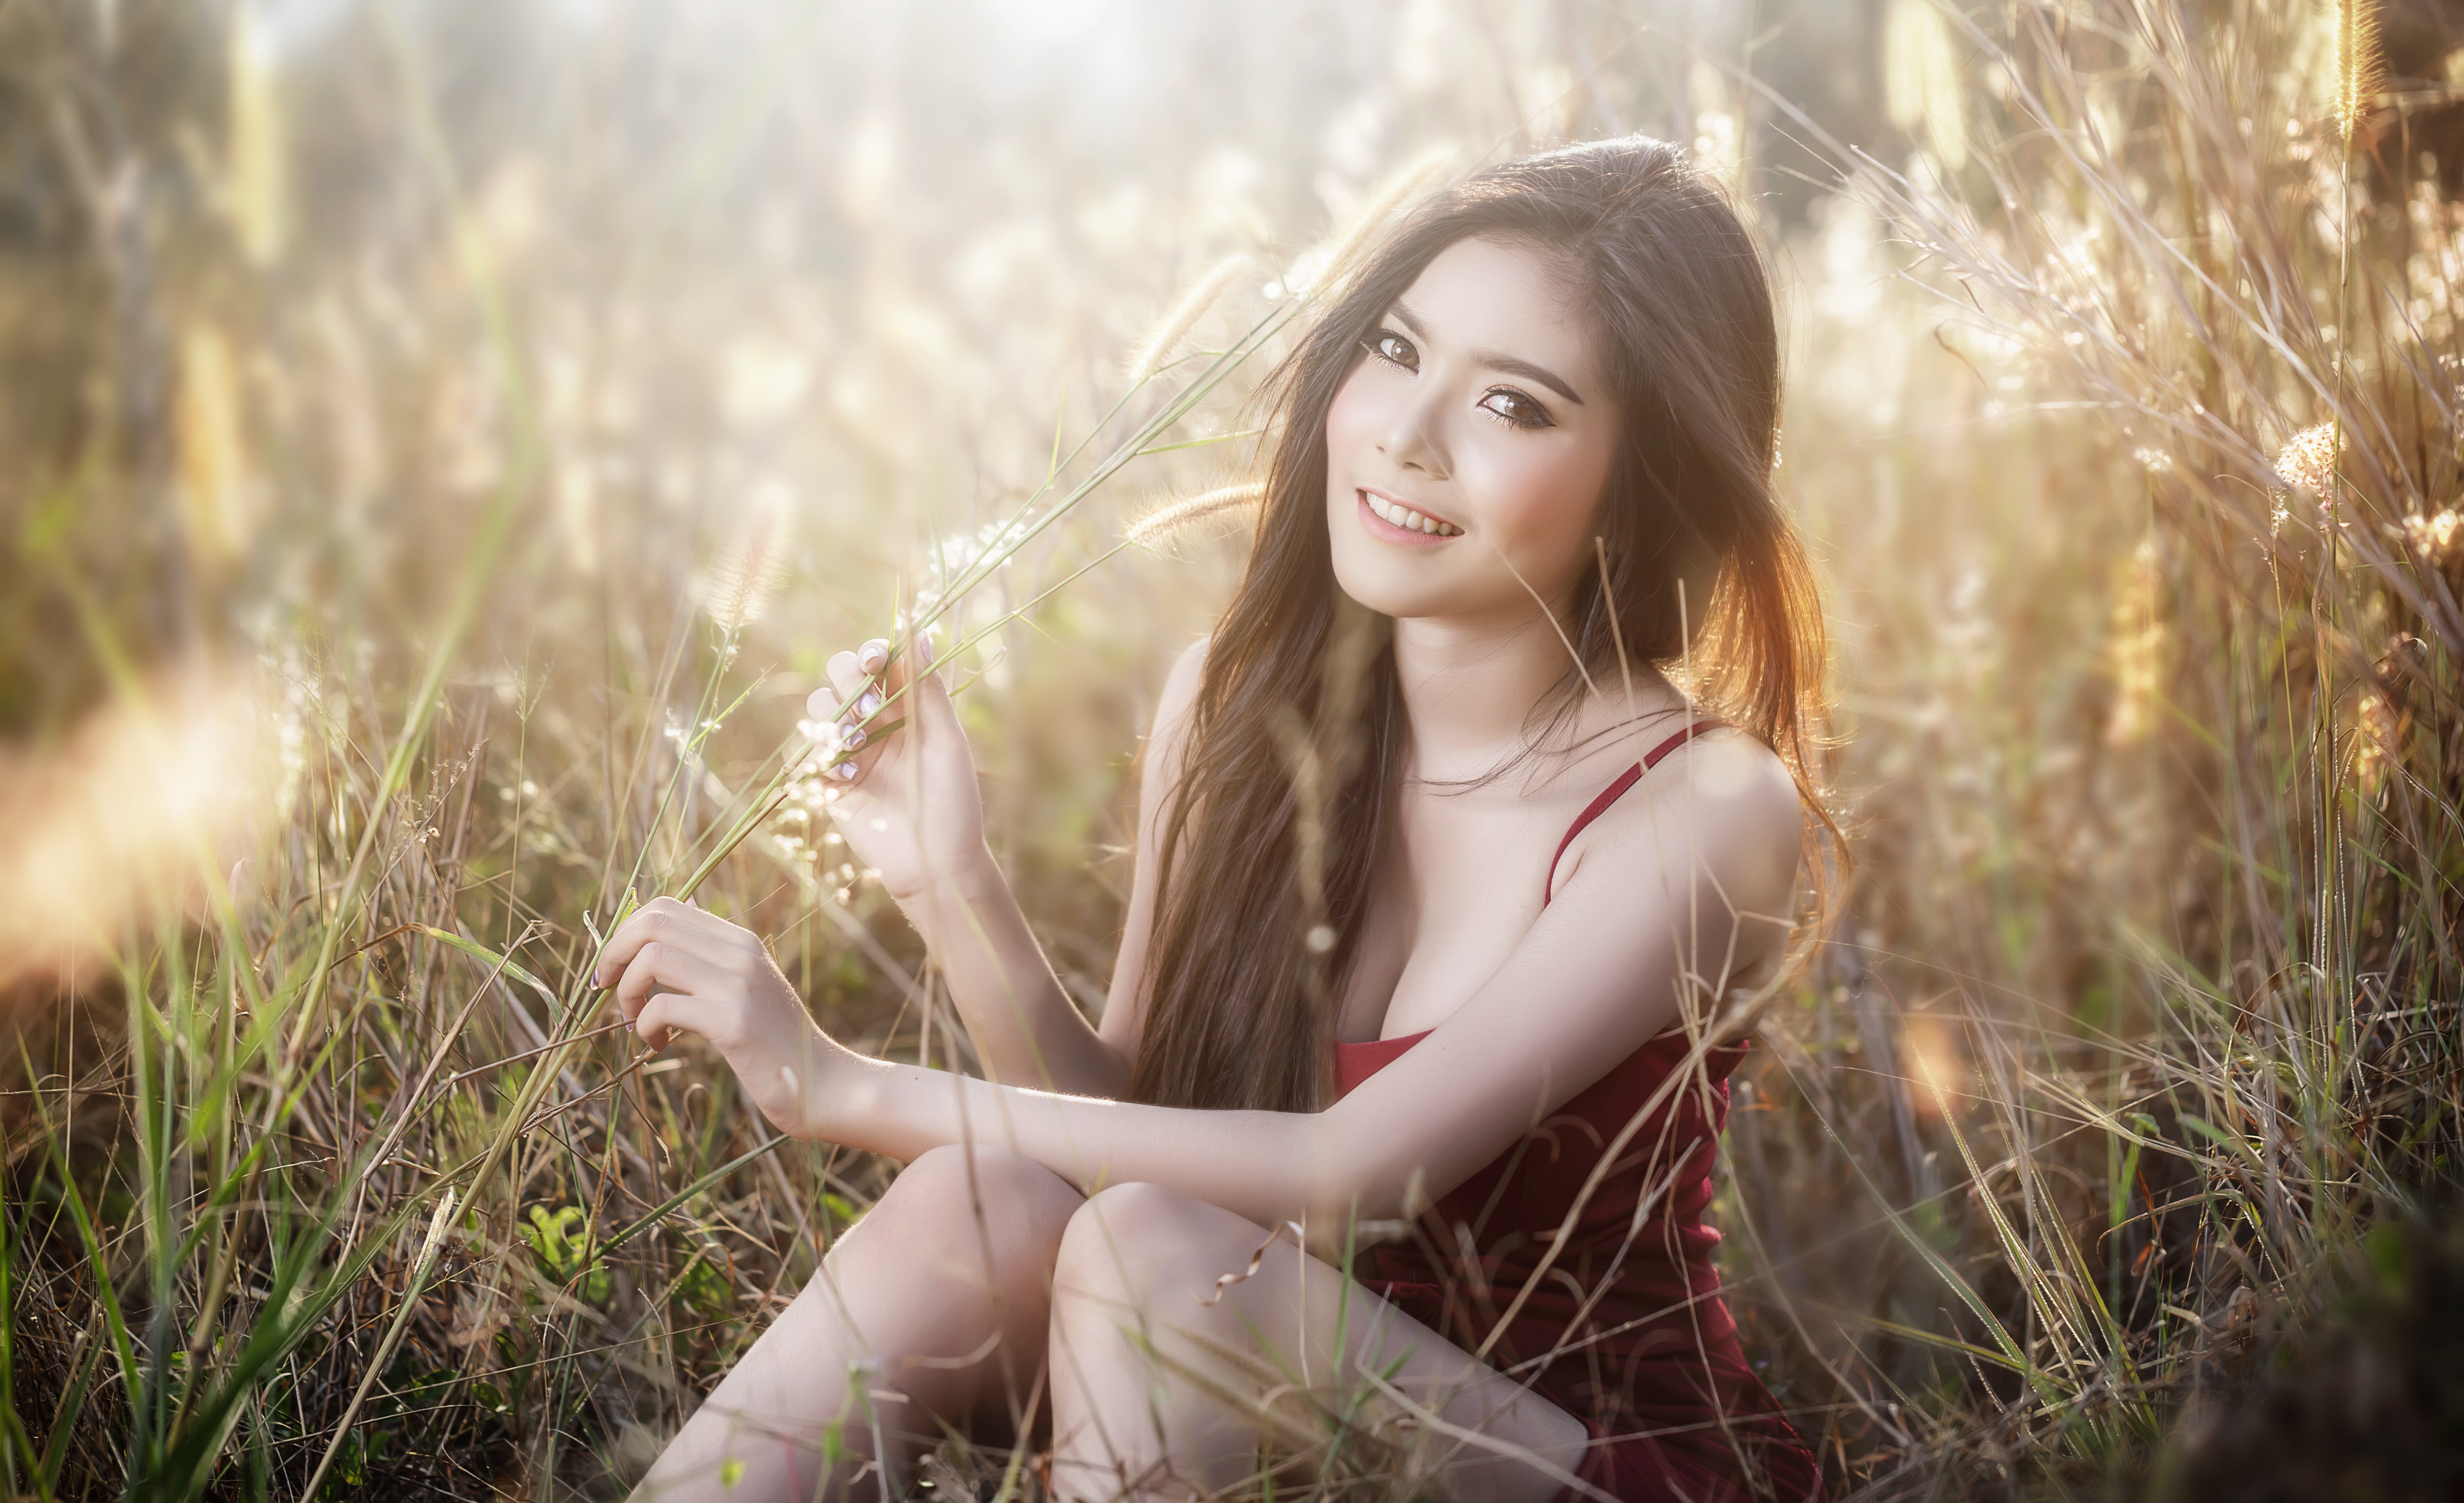 Asian Model Women Long Hair Brunette Depth Of Field Sitting Field Shirt Straw Smiling 5746x3505